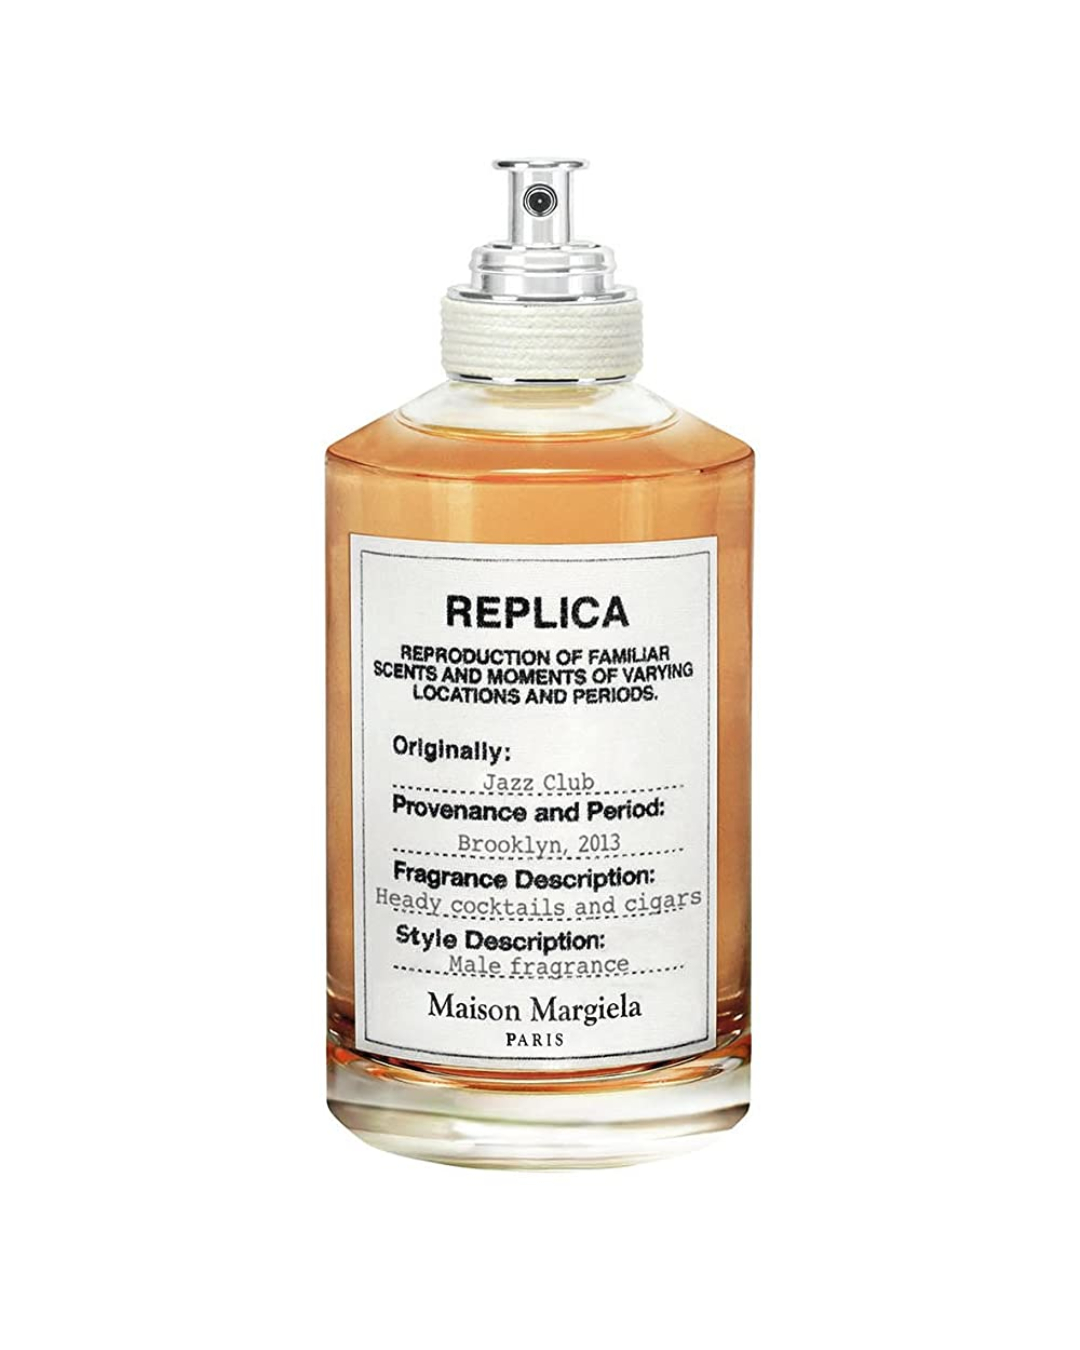 An orange bottle of Replica perfume.